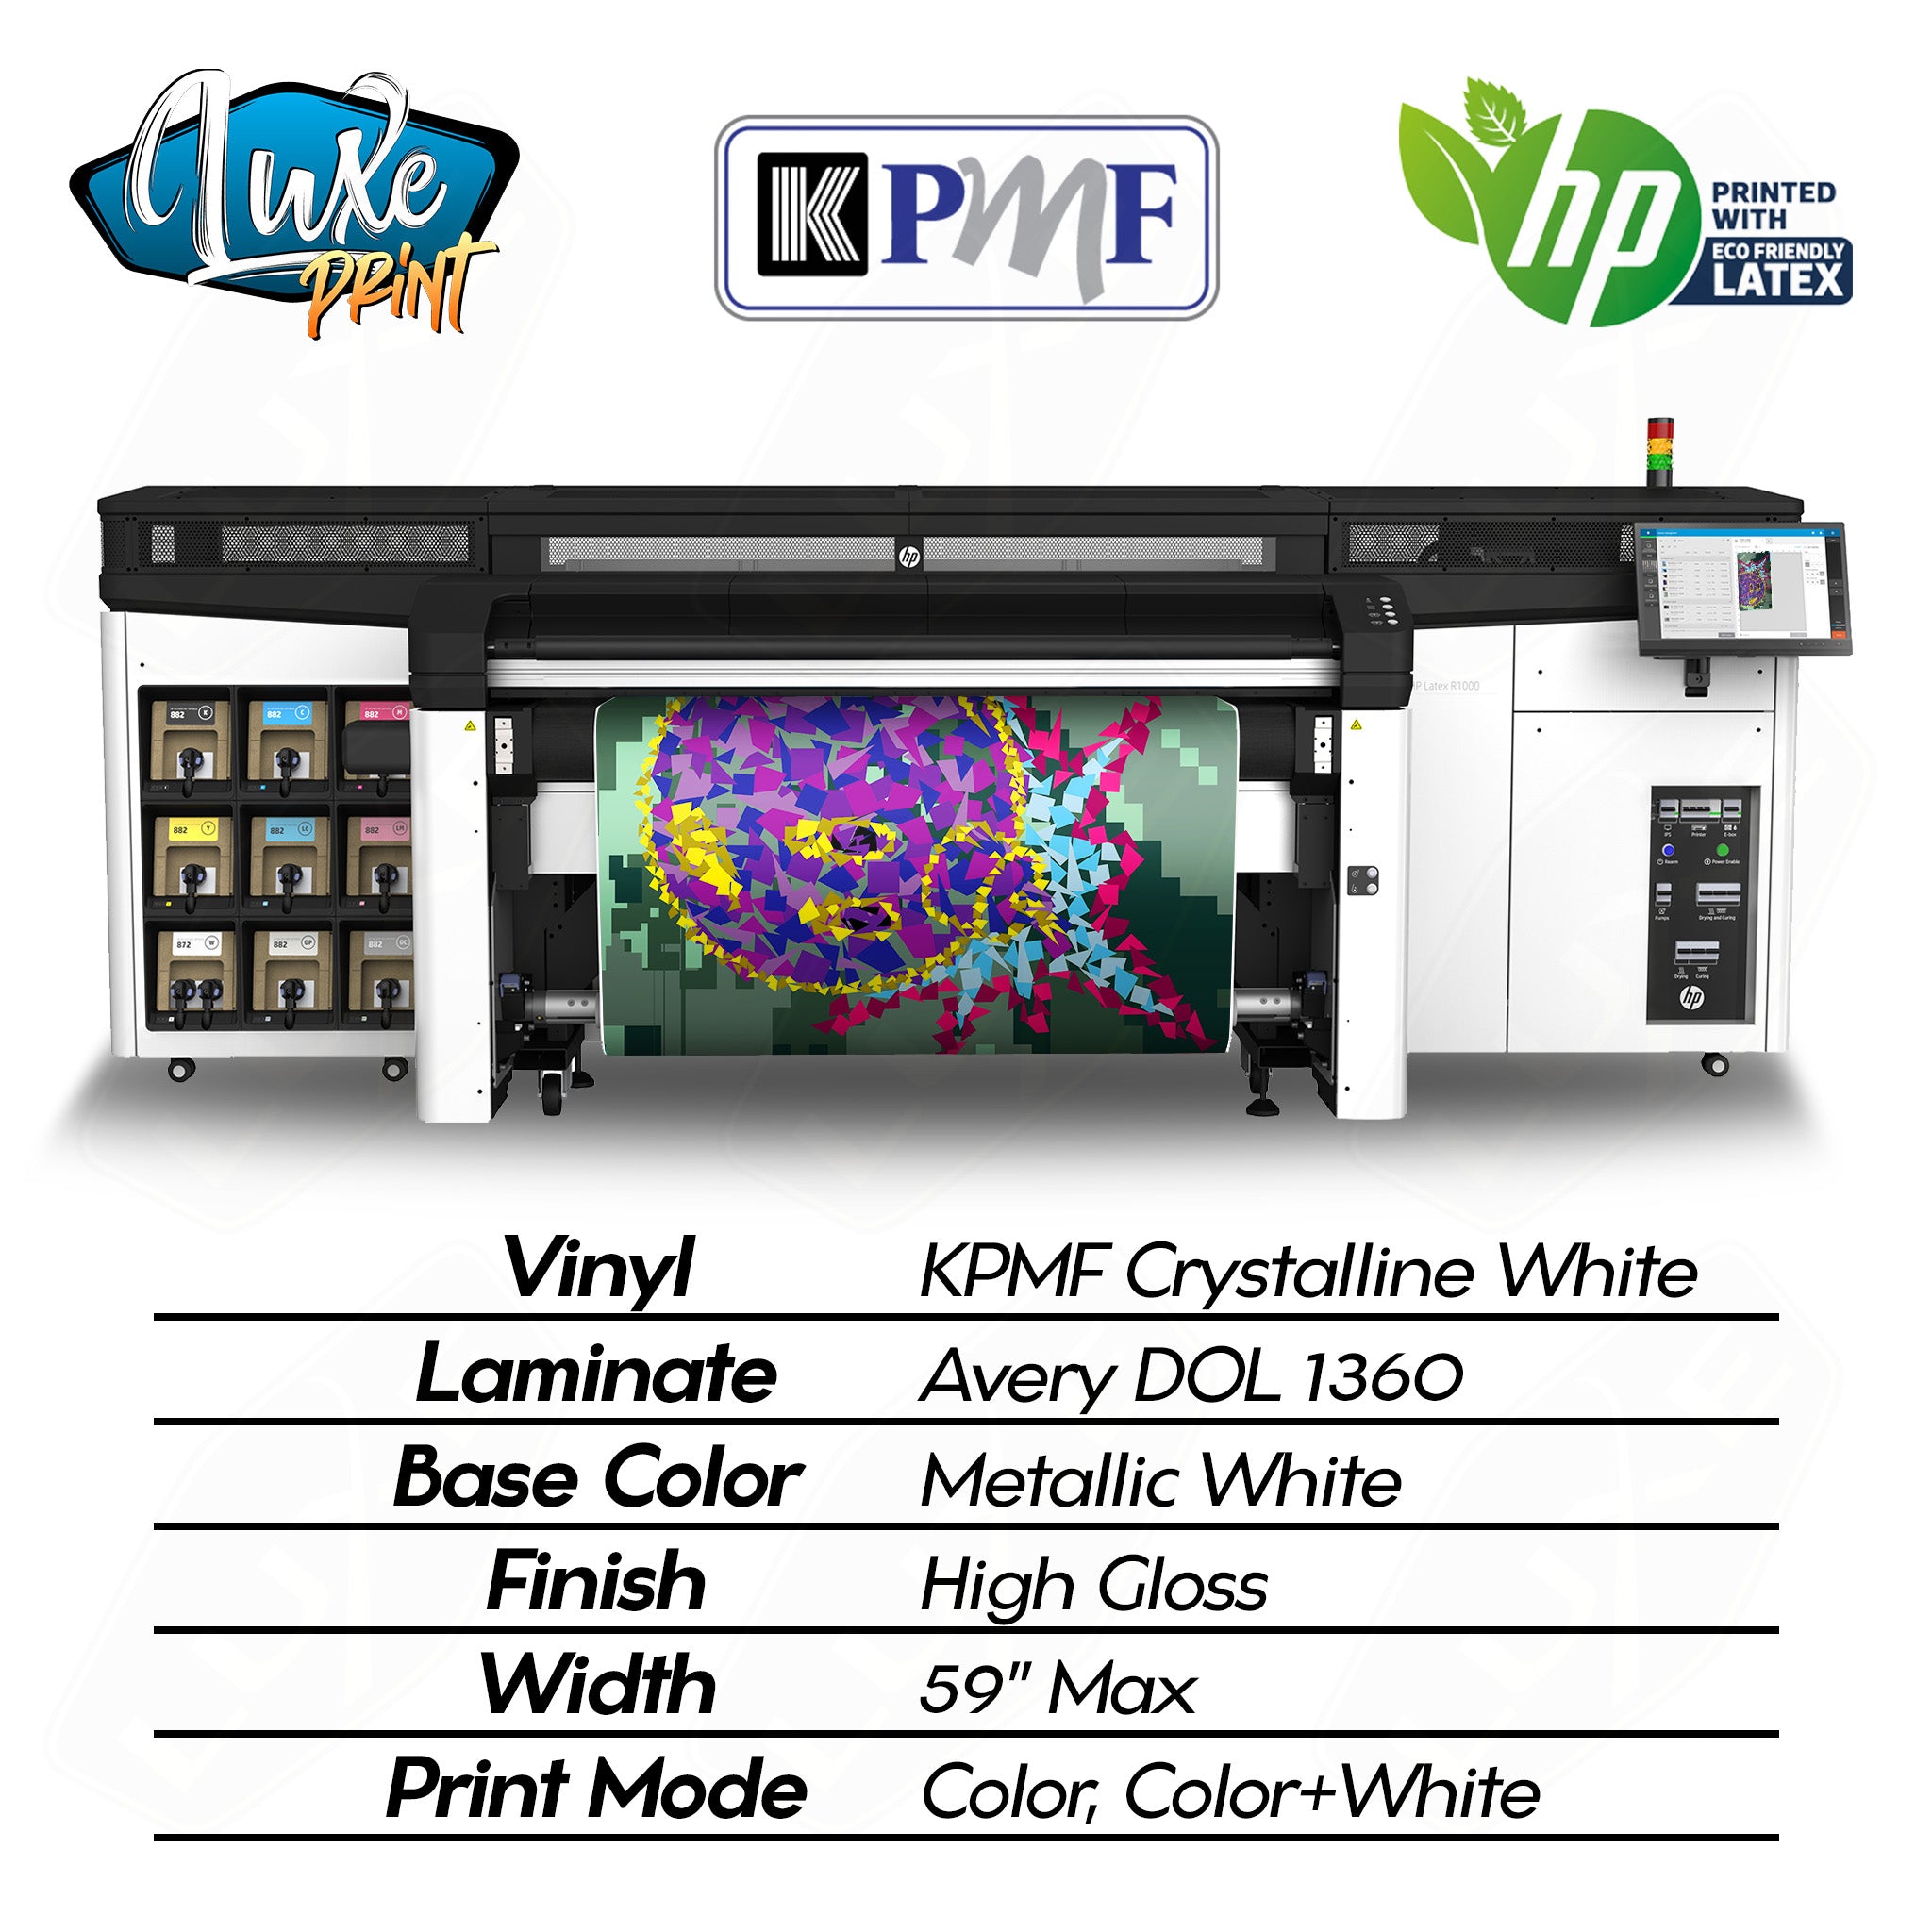 KPMF Crystalline White w/ Gloss Laminate - LightWrap